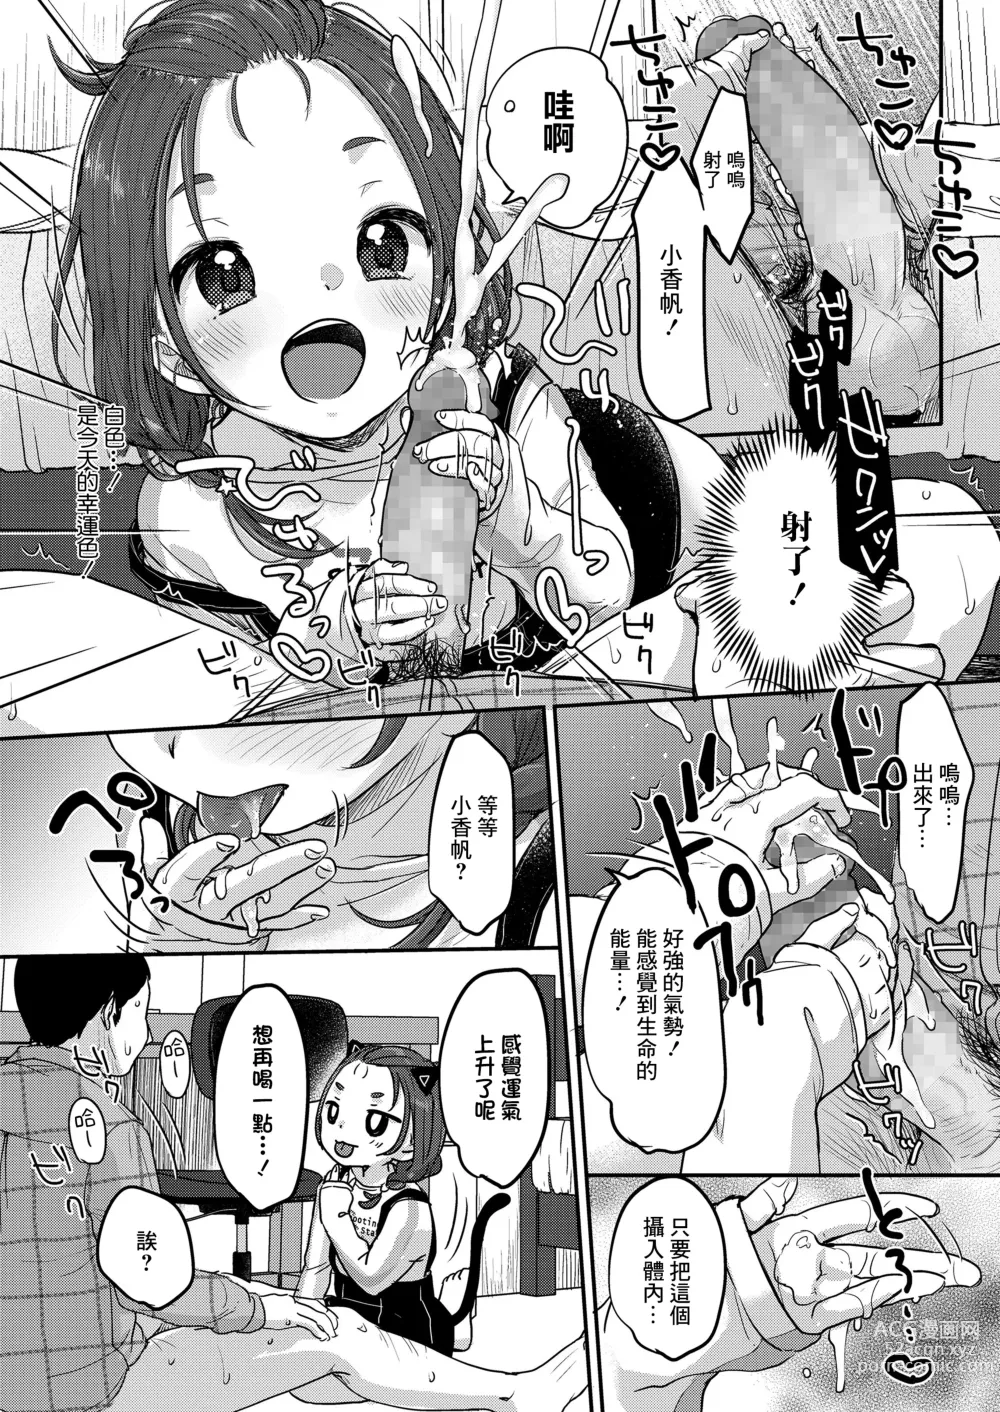 Page 7 of manga Kyou no Lucky Item